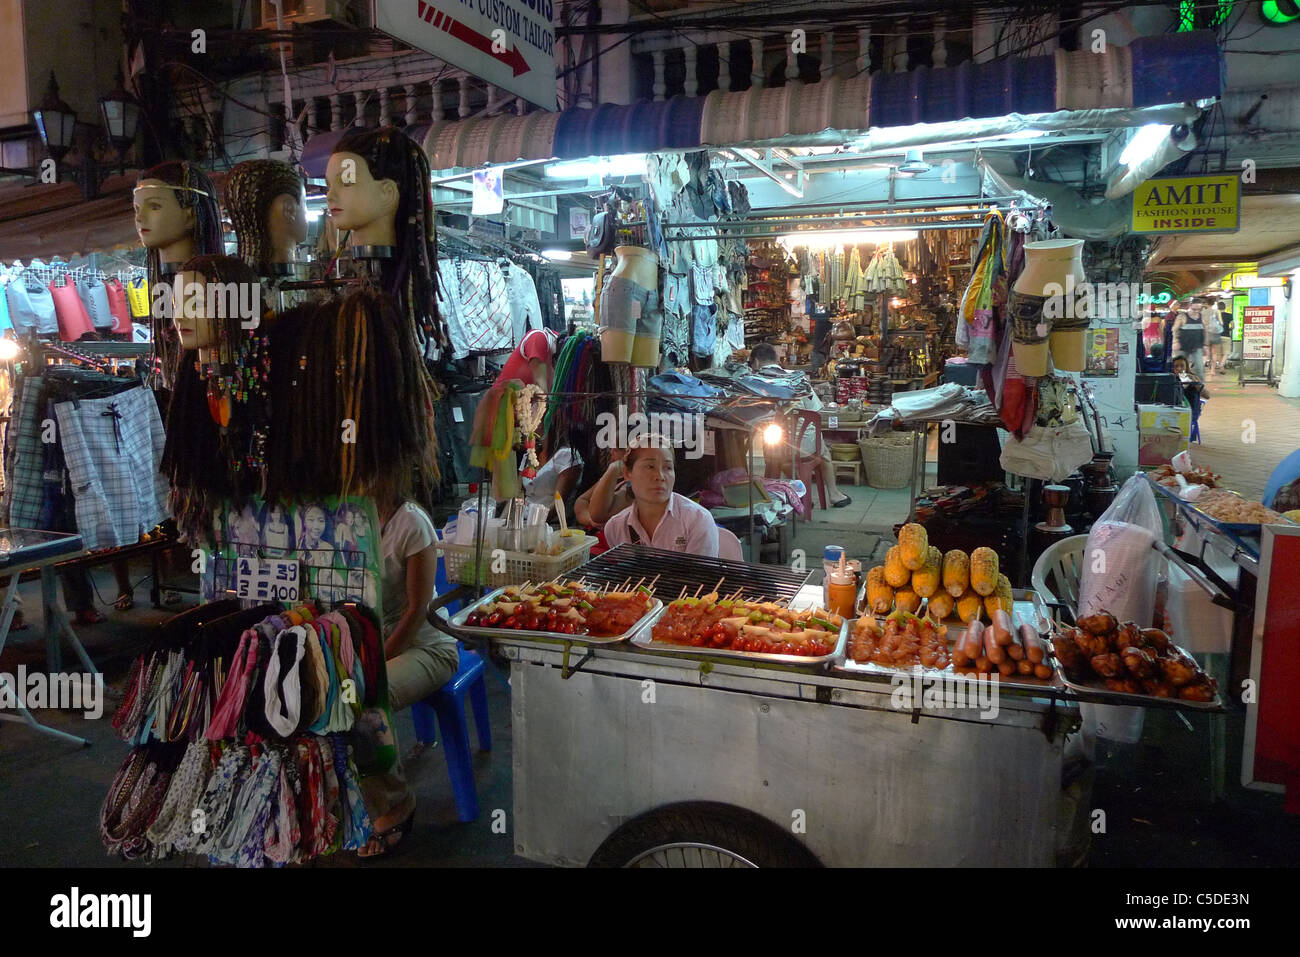 Thailandia Khao San Road, Bangkok. Bilancio area turistica. Cucina di strada. Foto di Sean Sprague Foto Stock